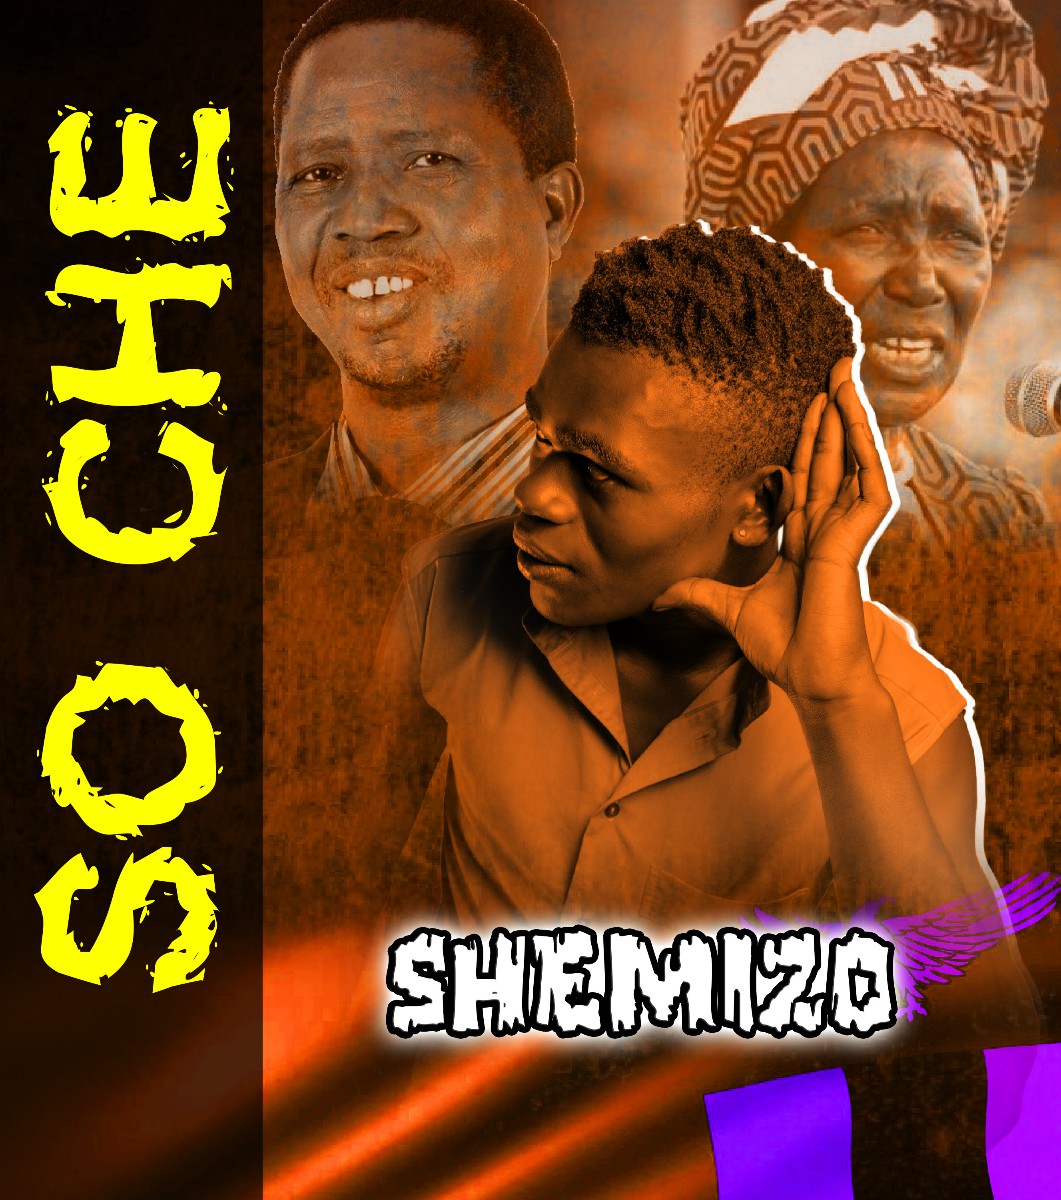 Shemizo - So Che